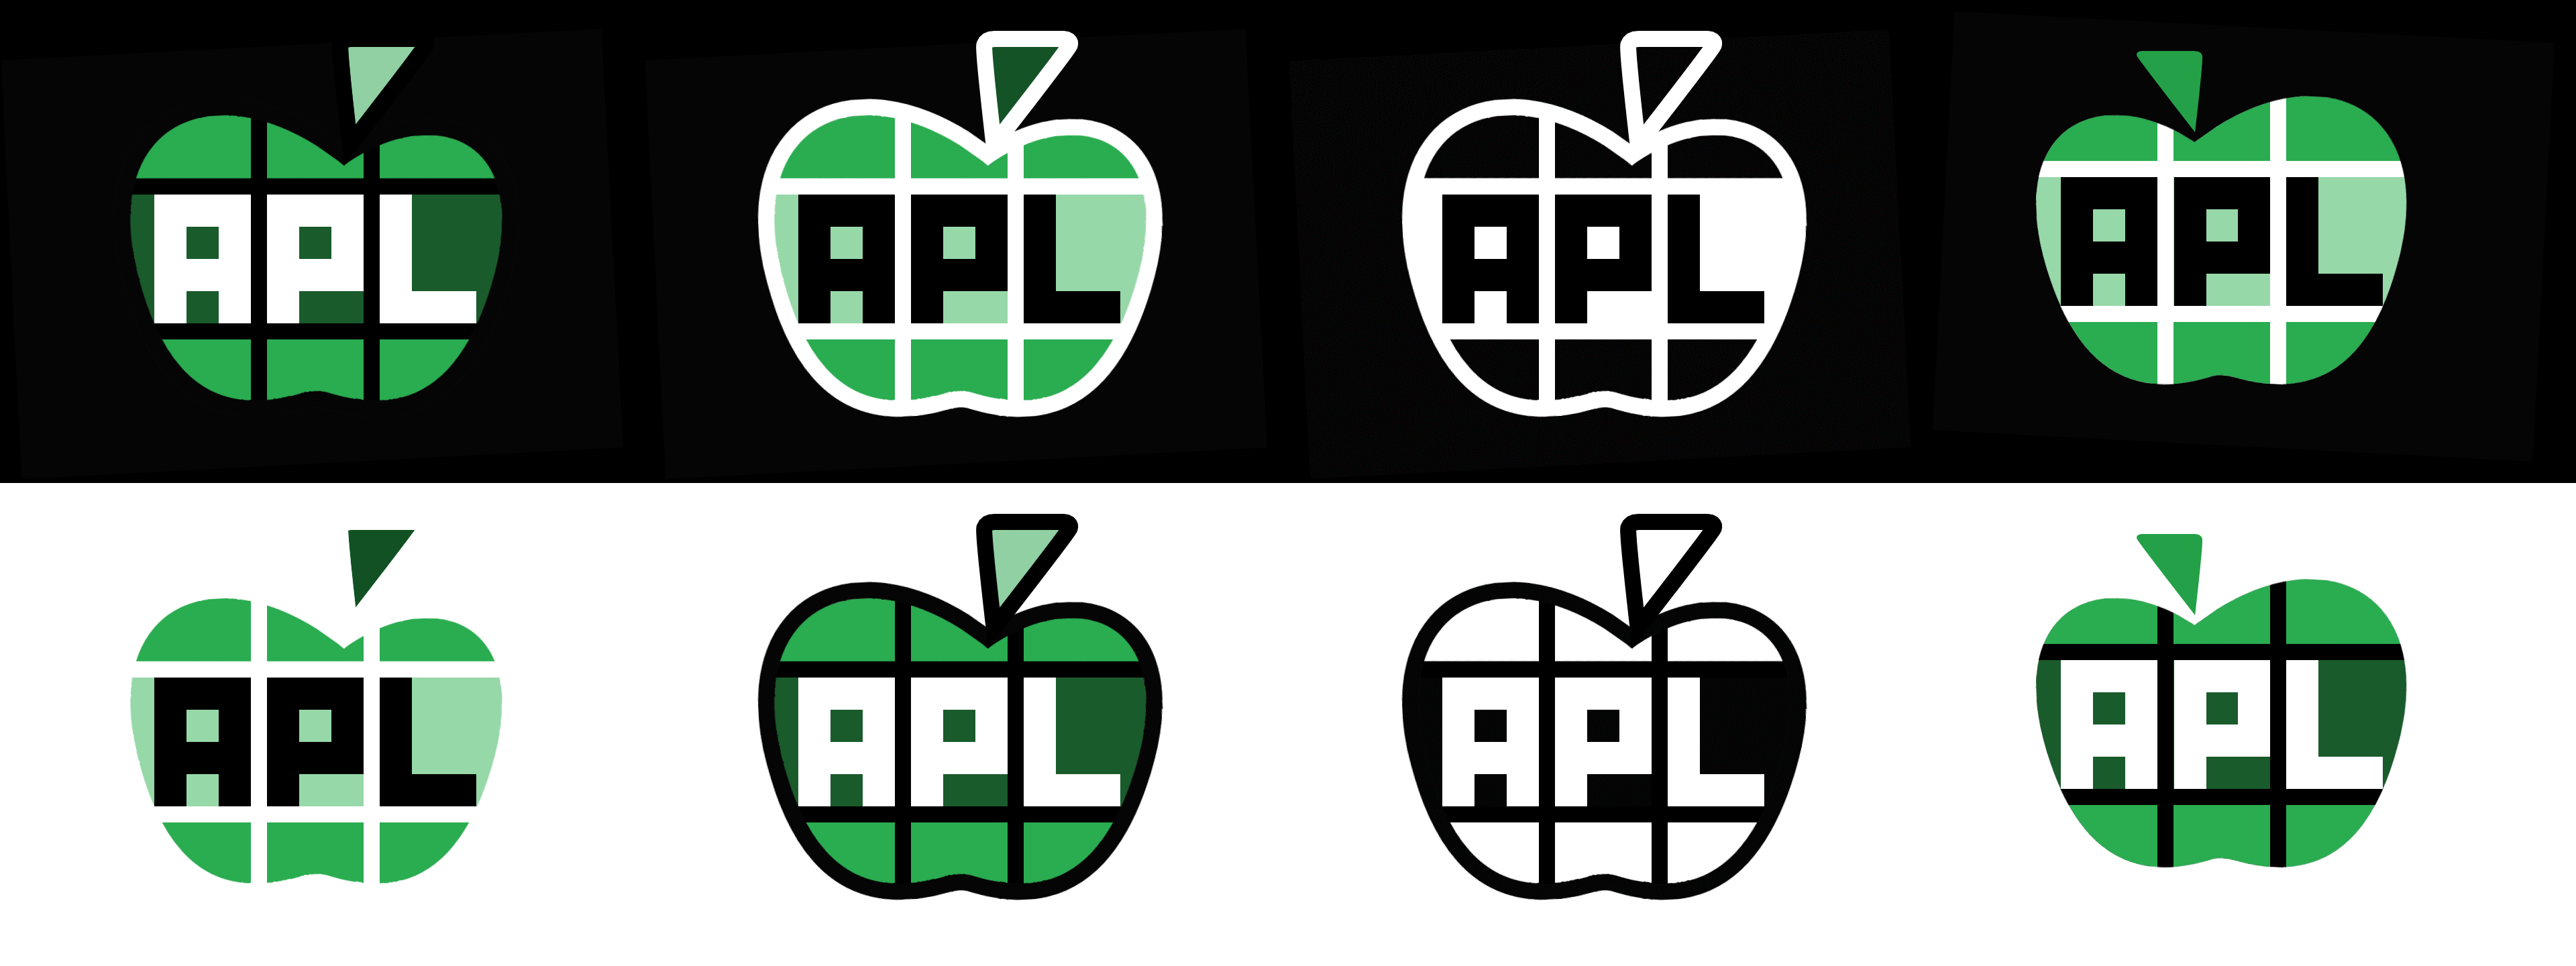 Alternative nested bitmap logos